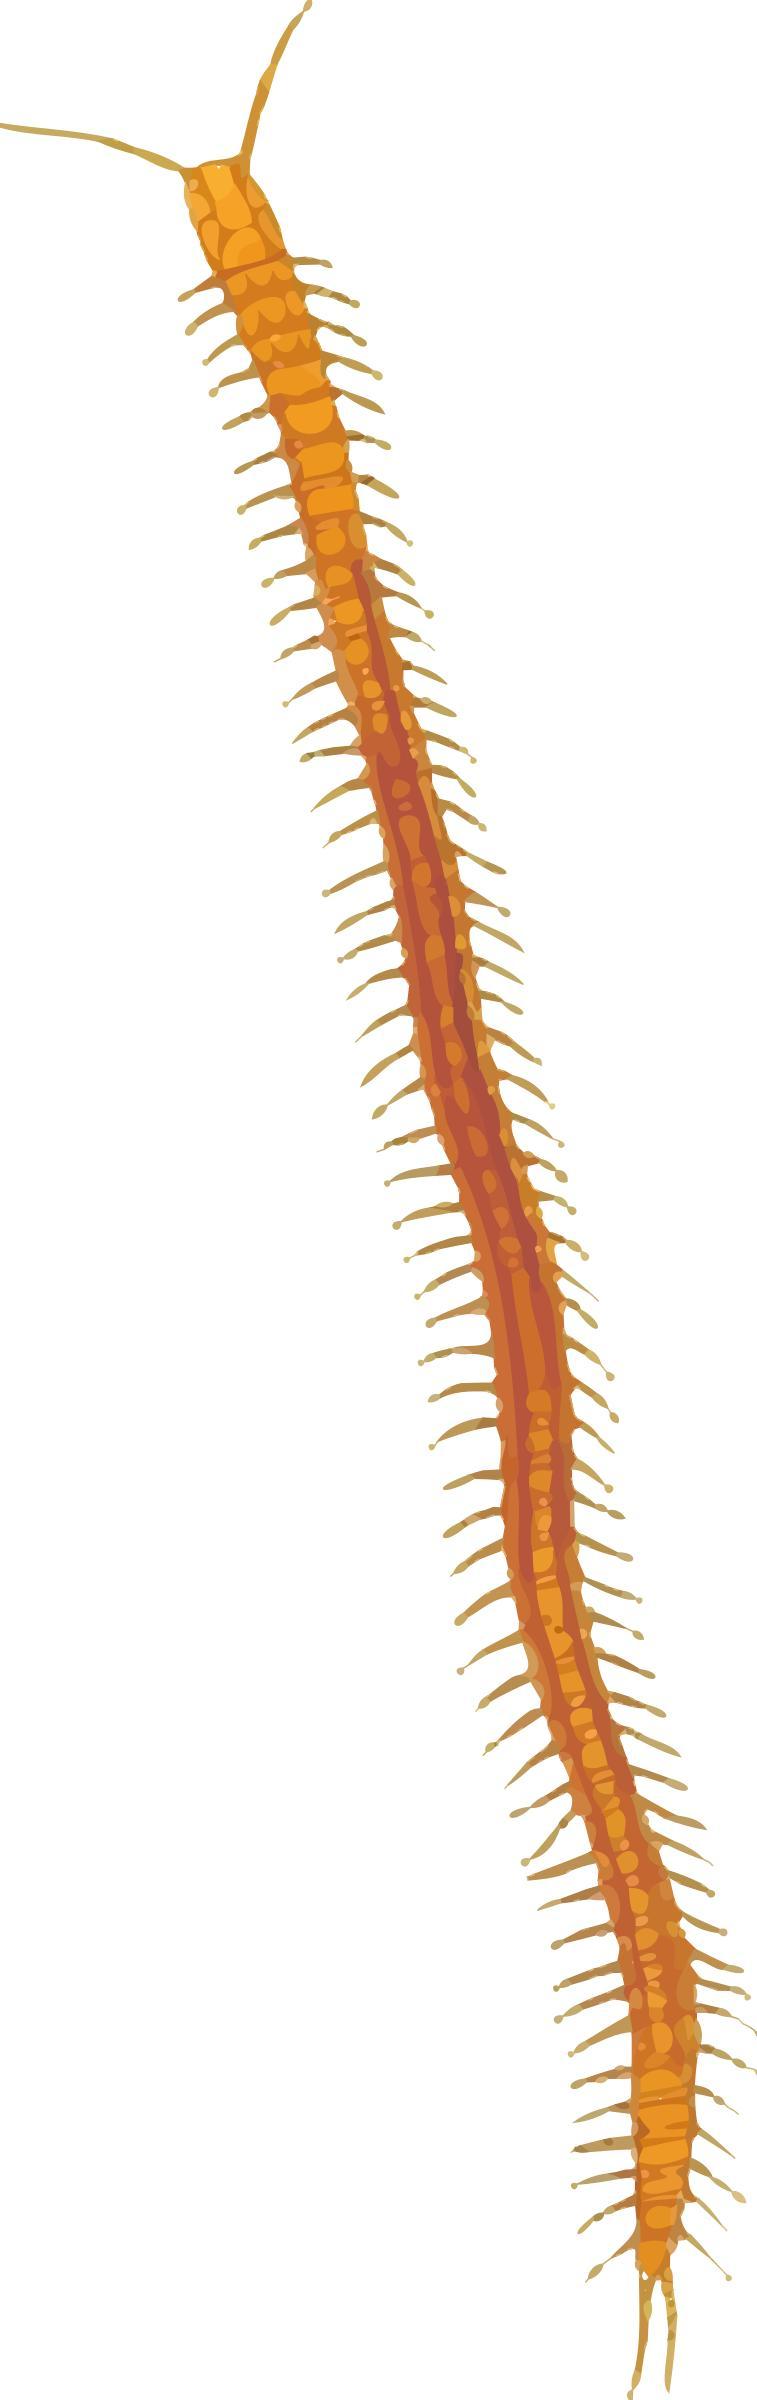 Centipede 2 png transparent